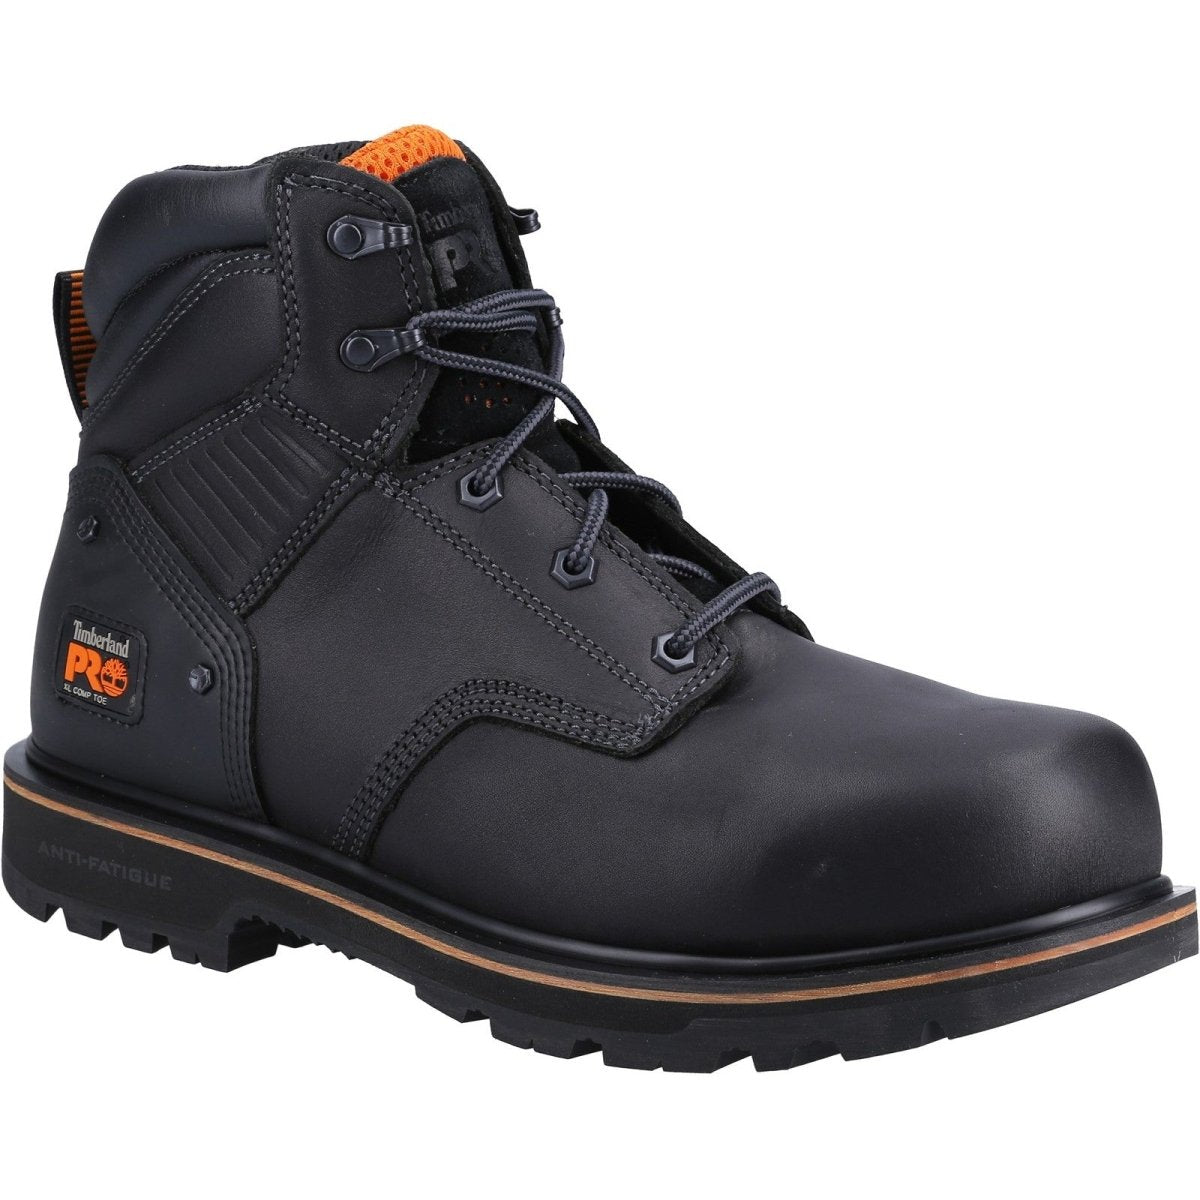 Timberland Pro Ballast Safety Boot - Shoe Store Direct